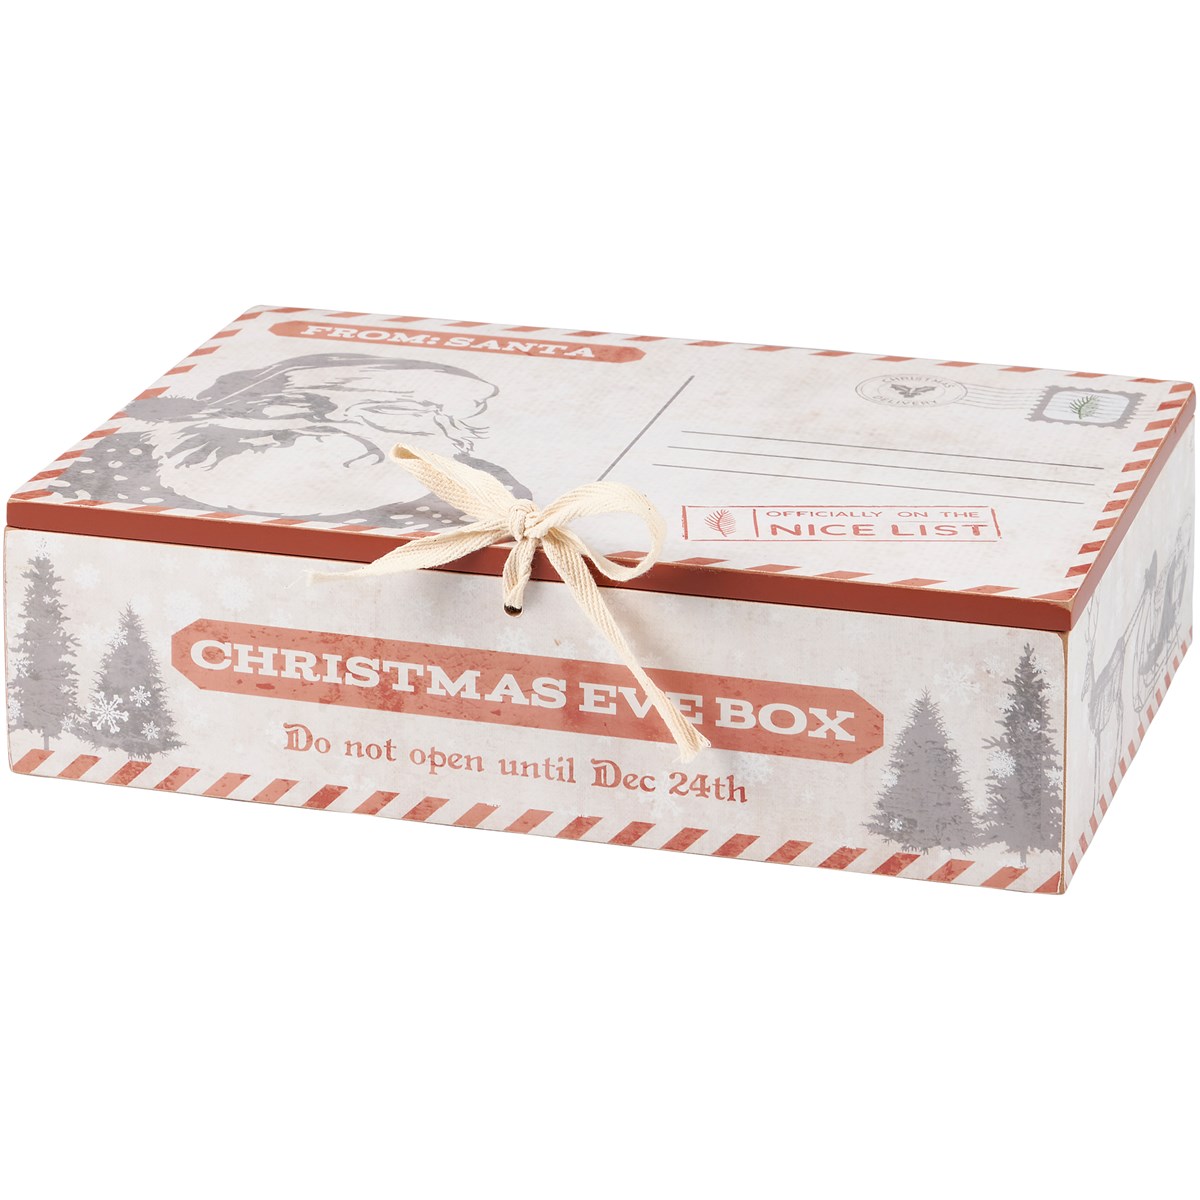 Vintage Christmas Eve Giving Box - Wood, Paper, Metal, Cotton